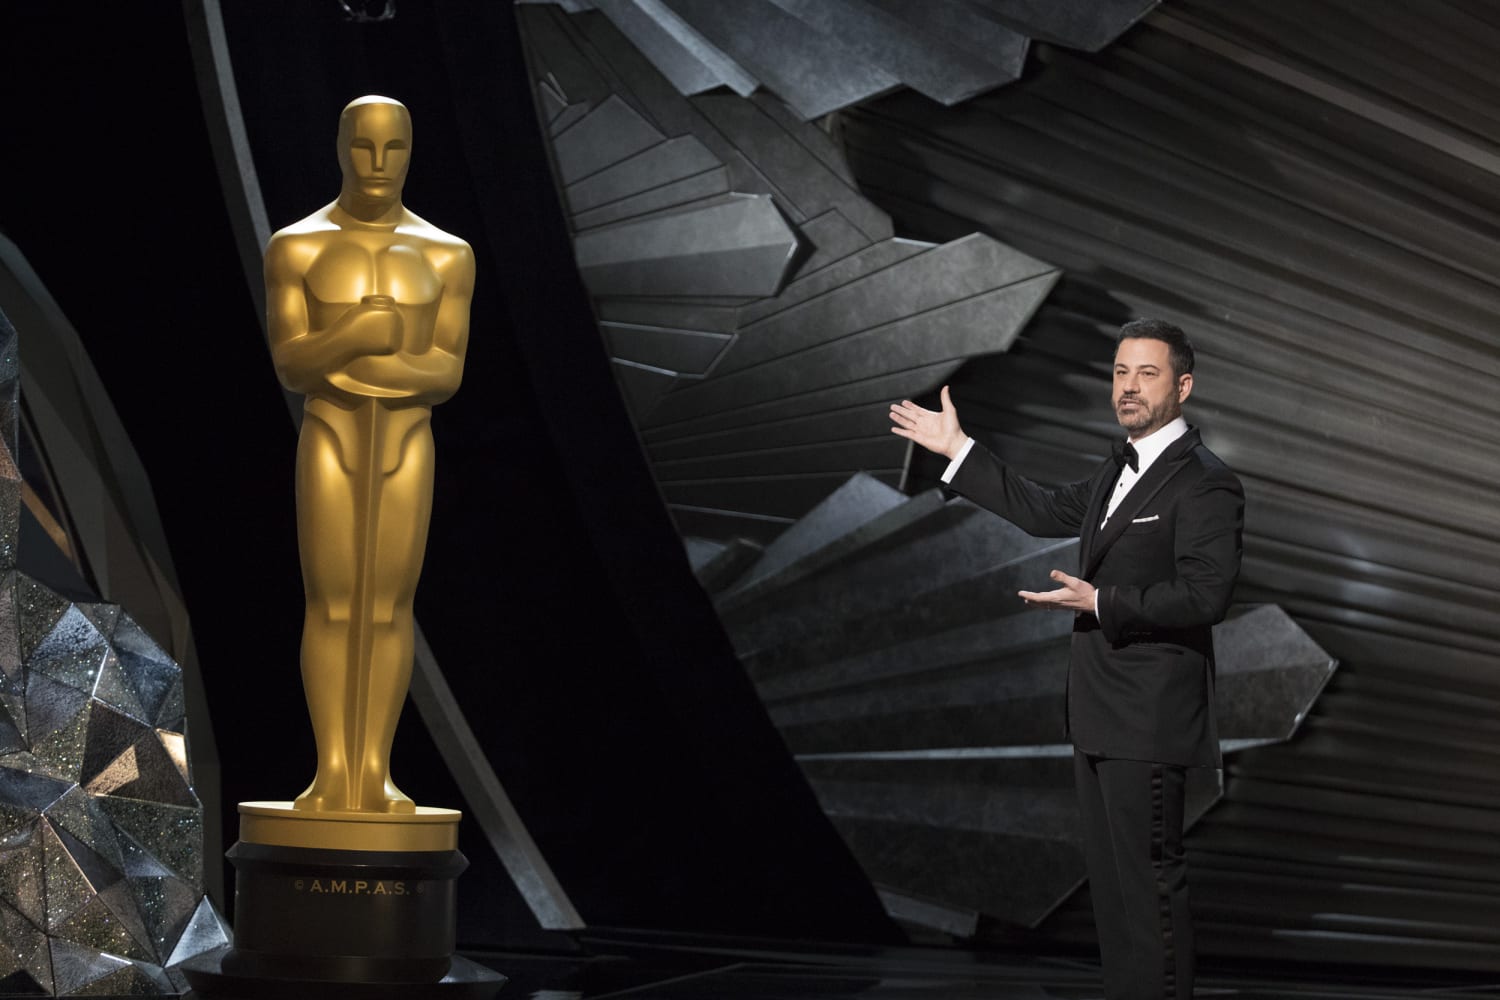 Academy Sets Glenn Weiss, Ricky Kirshner as Producers for 95th Oscars